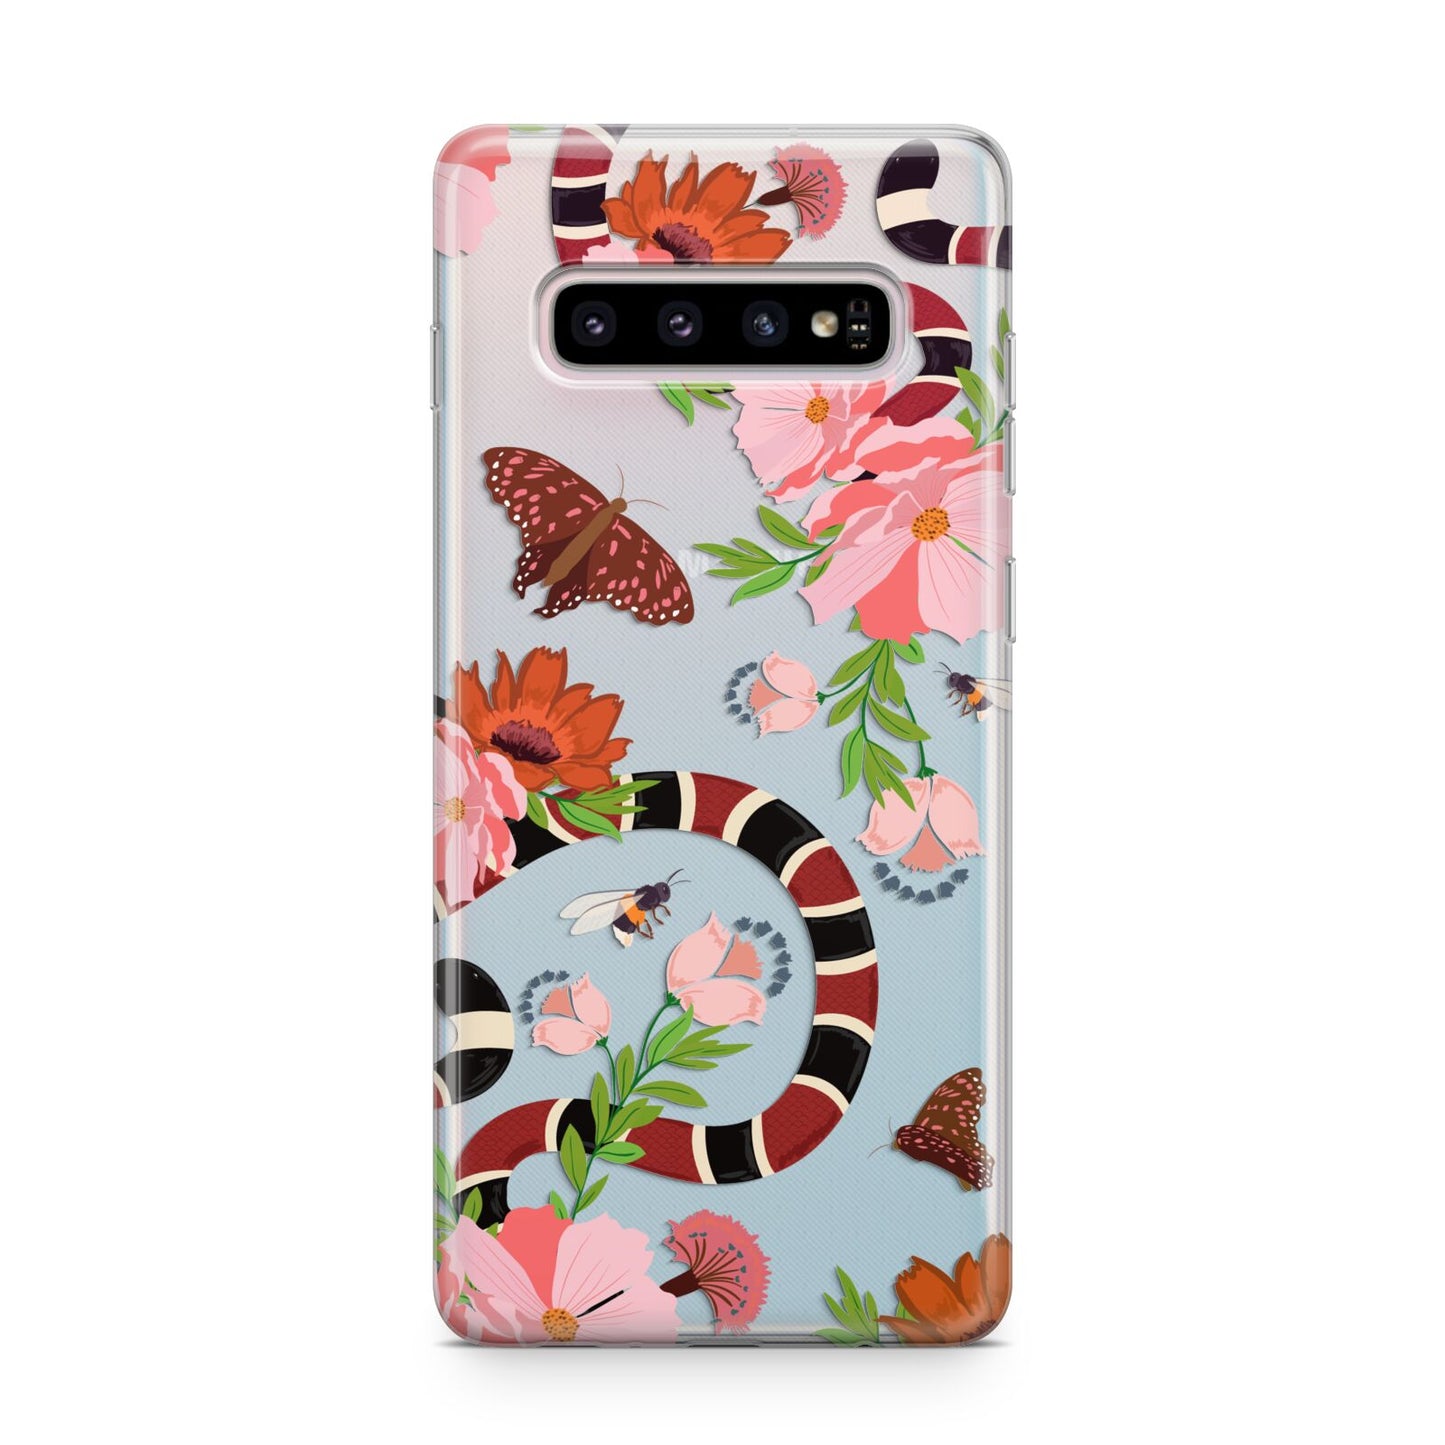 Floral Snake Samsung Galaxy S10 Plus Case